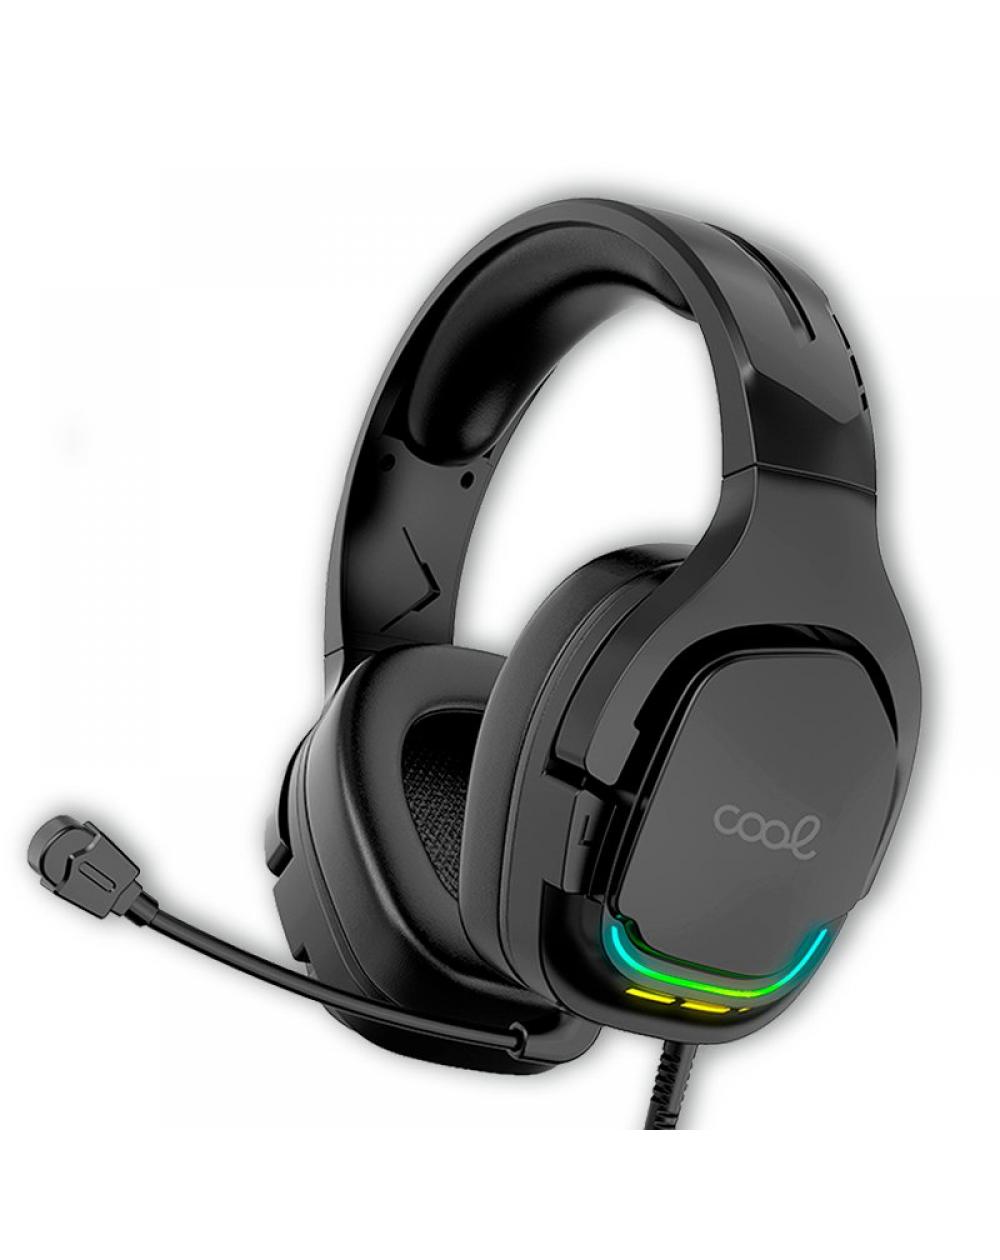 Auriculares Stereo PC / PS4 / PS5 / Xbox Gaming Iluminación COOL Tuned Black USB 7.1